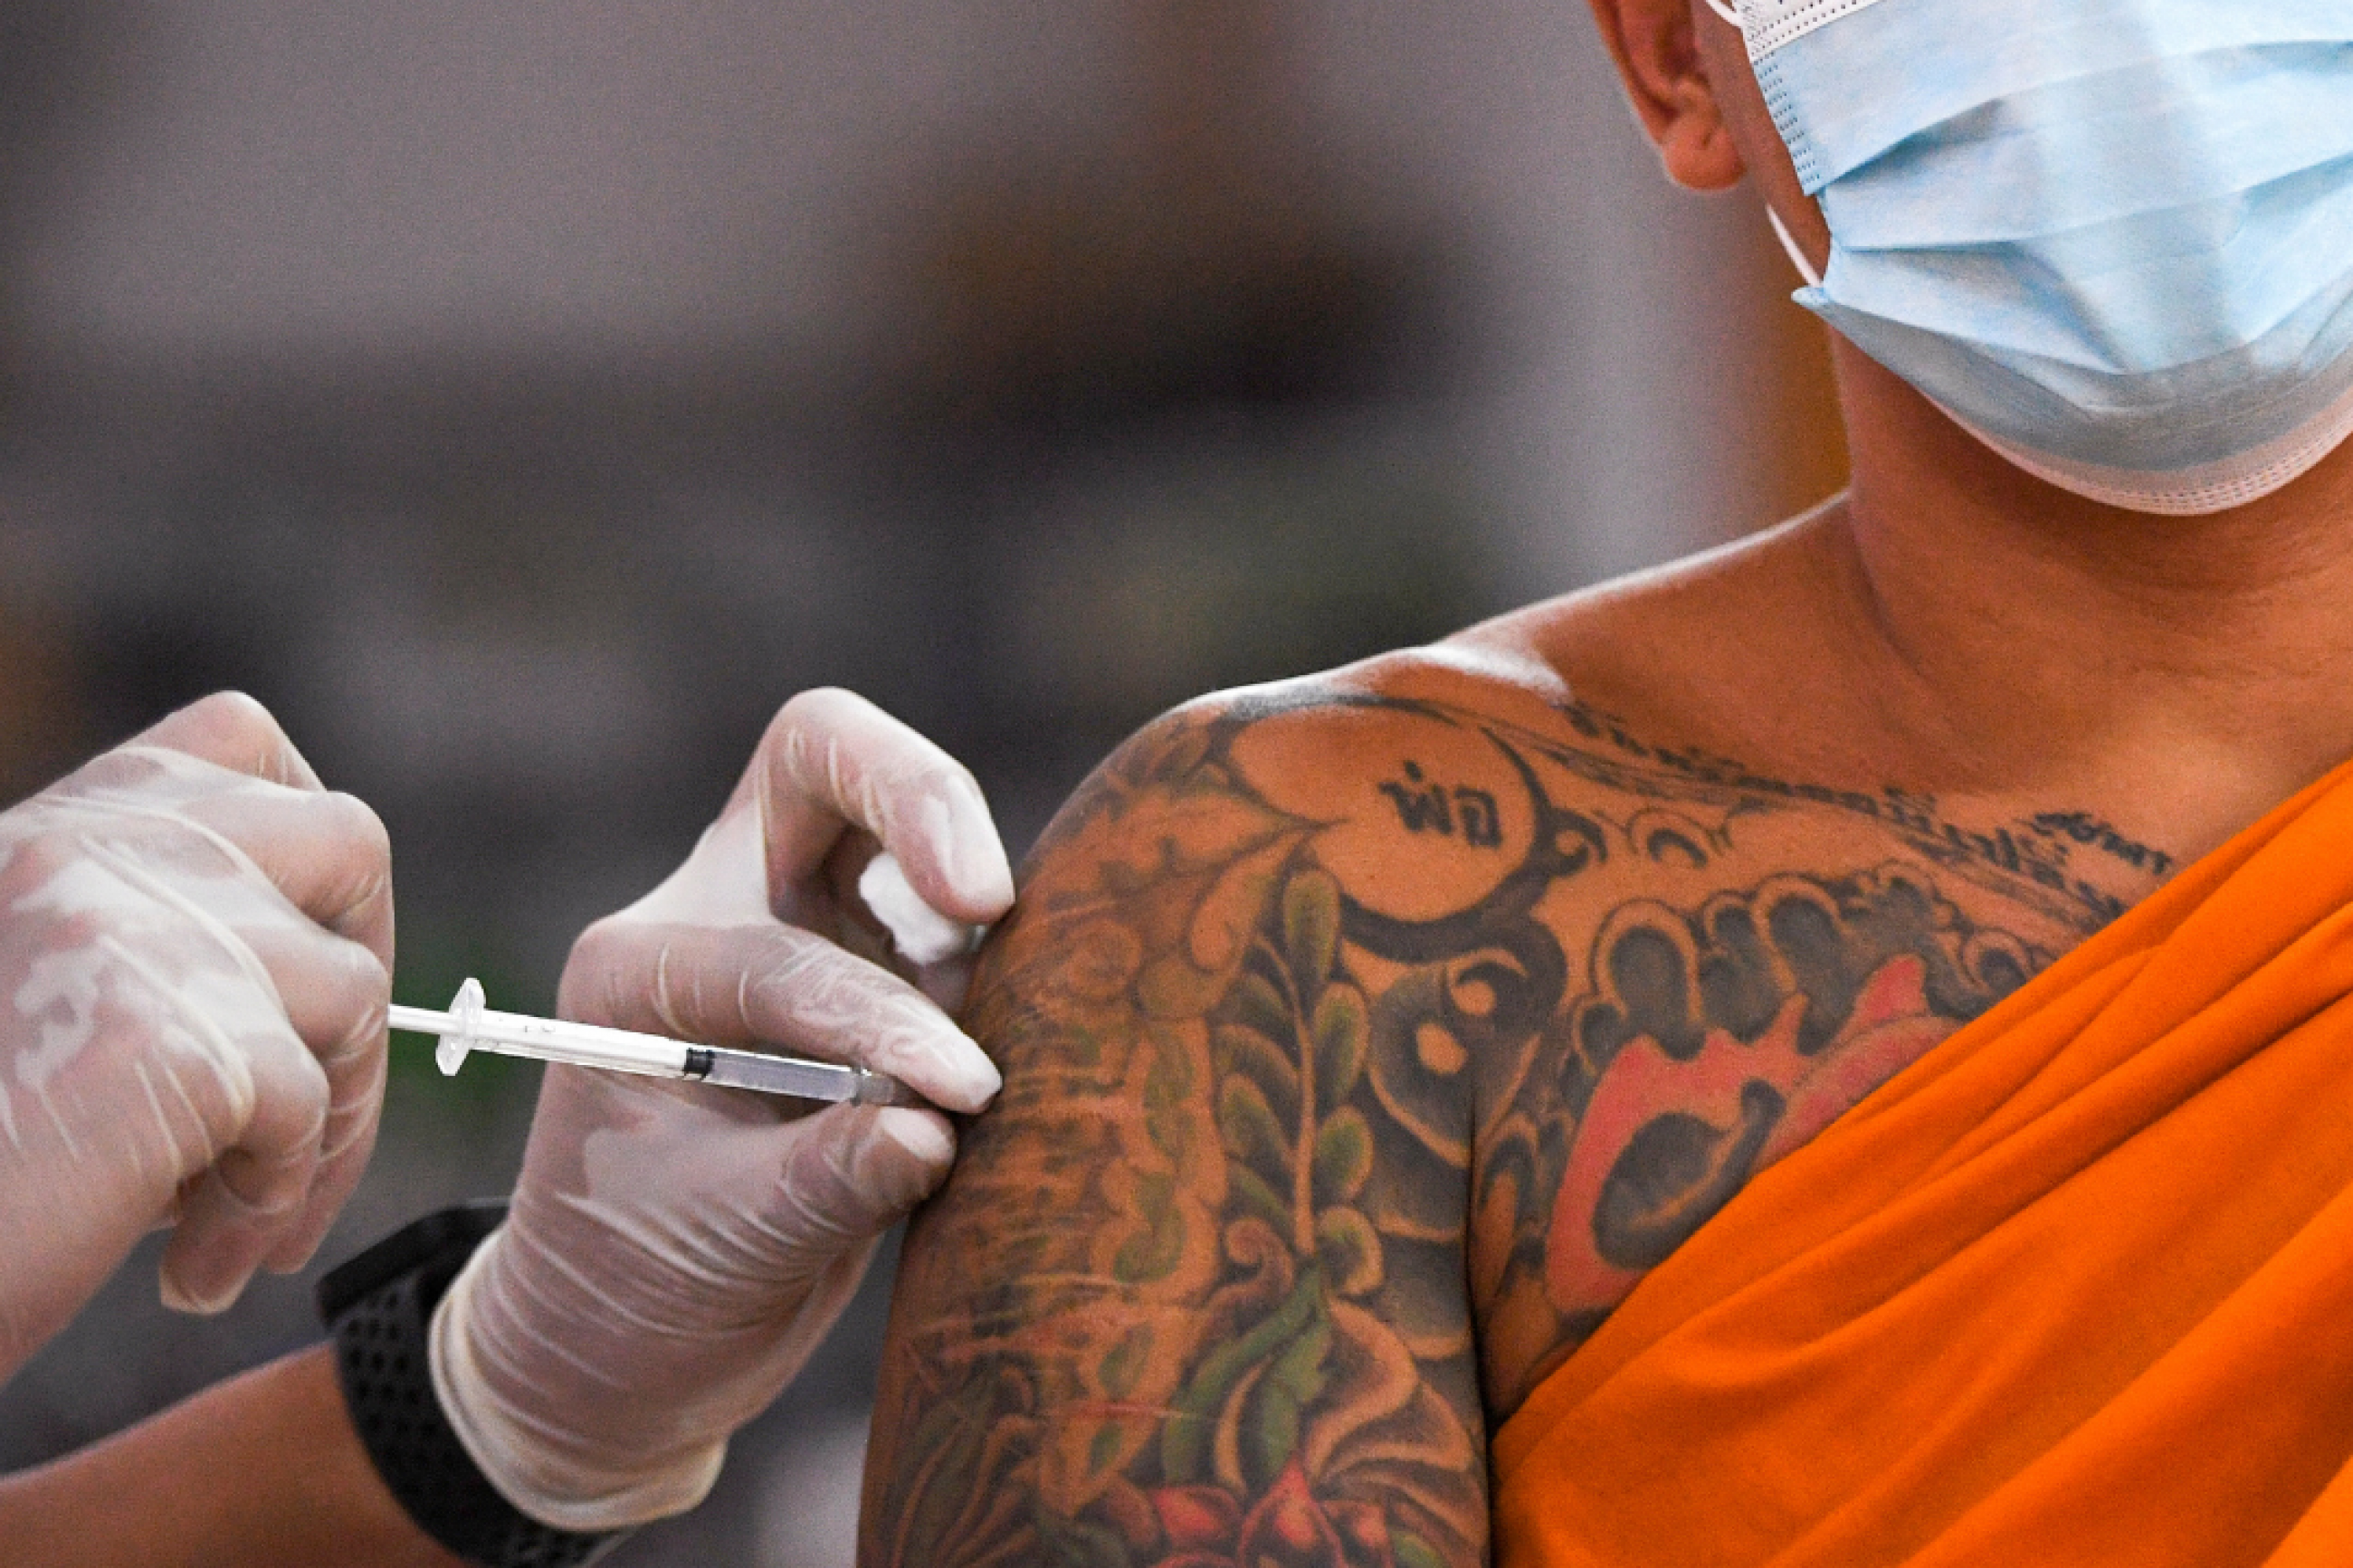 A Buddhist monk receives a Sinovac COVID-19 vaccine in Bangkok, Thailand on April 2, 2021. REUTERS/Chalinee Thirasupa